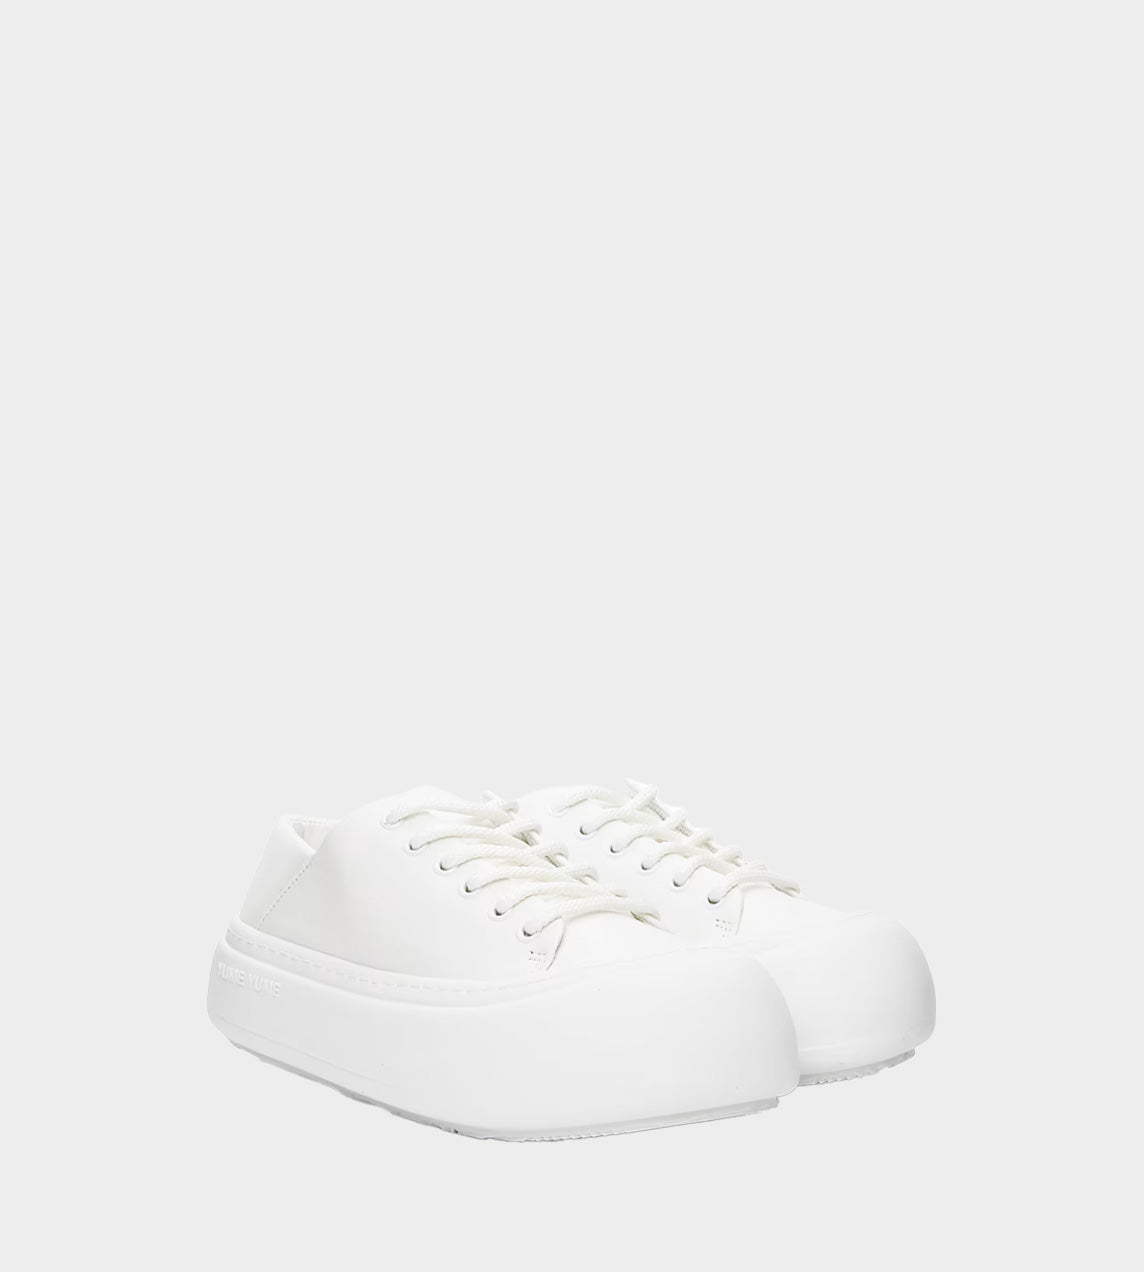 Yume Yume - Goofy Sneaker White Leather